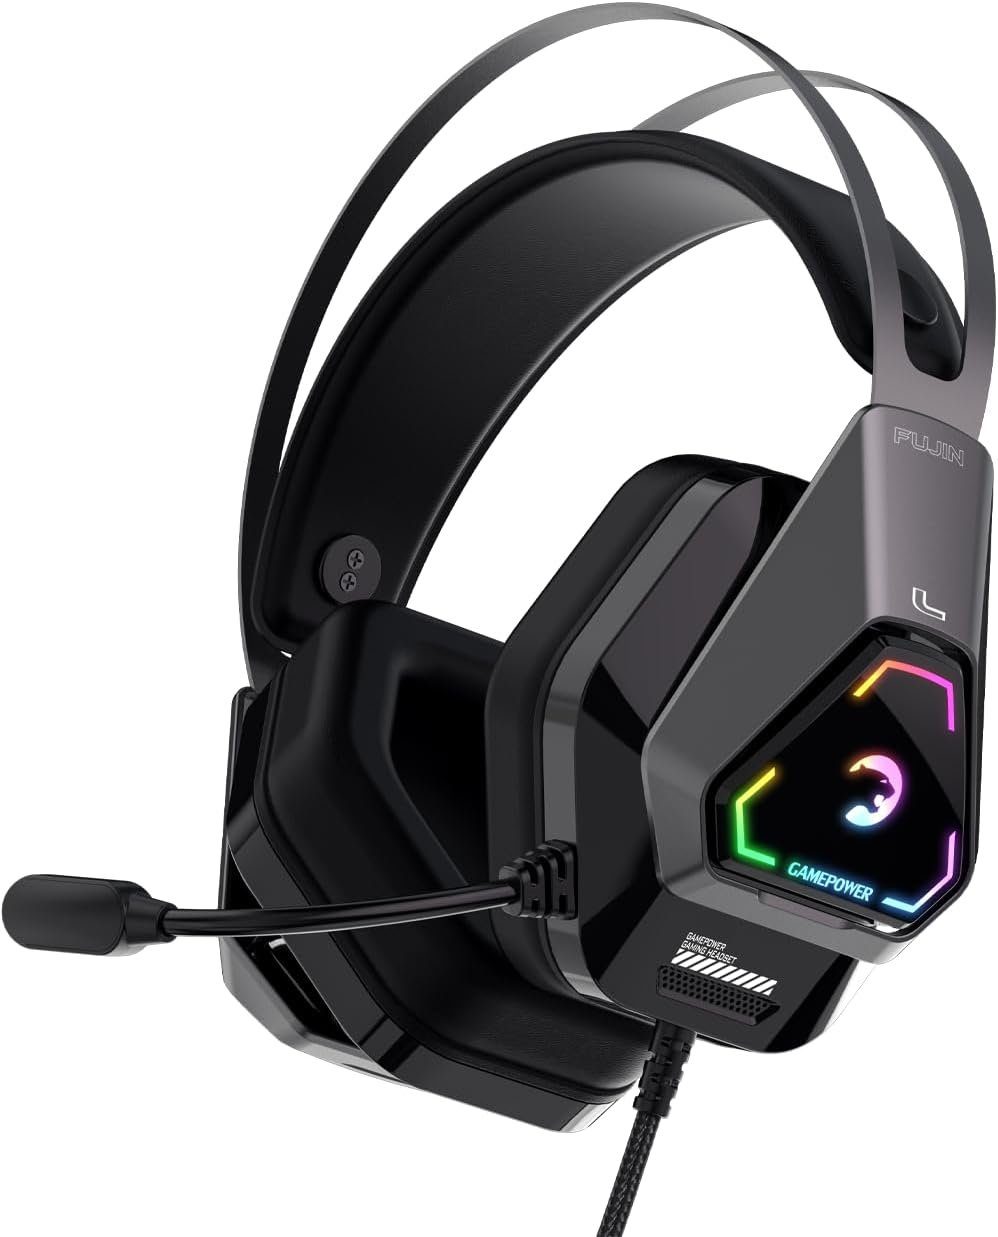 GAMEPOWER kabelgebundene Gaming-Headset Kopfhörer Mikrofon) mit Headphones, (Wired 7.1 Surround Kabel, 50-mm-Treibern Mit RGB,